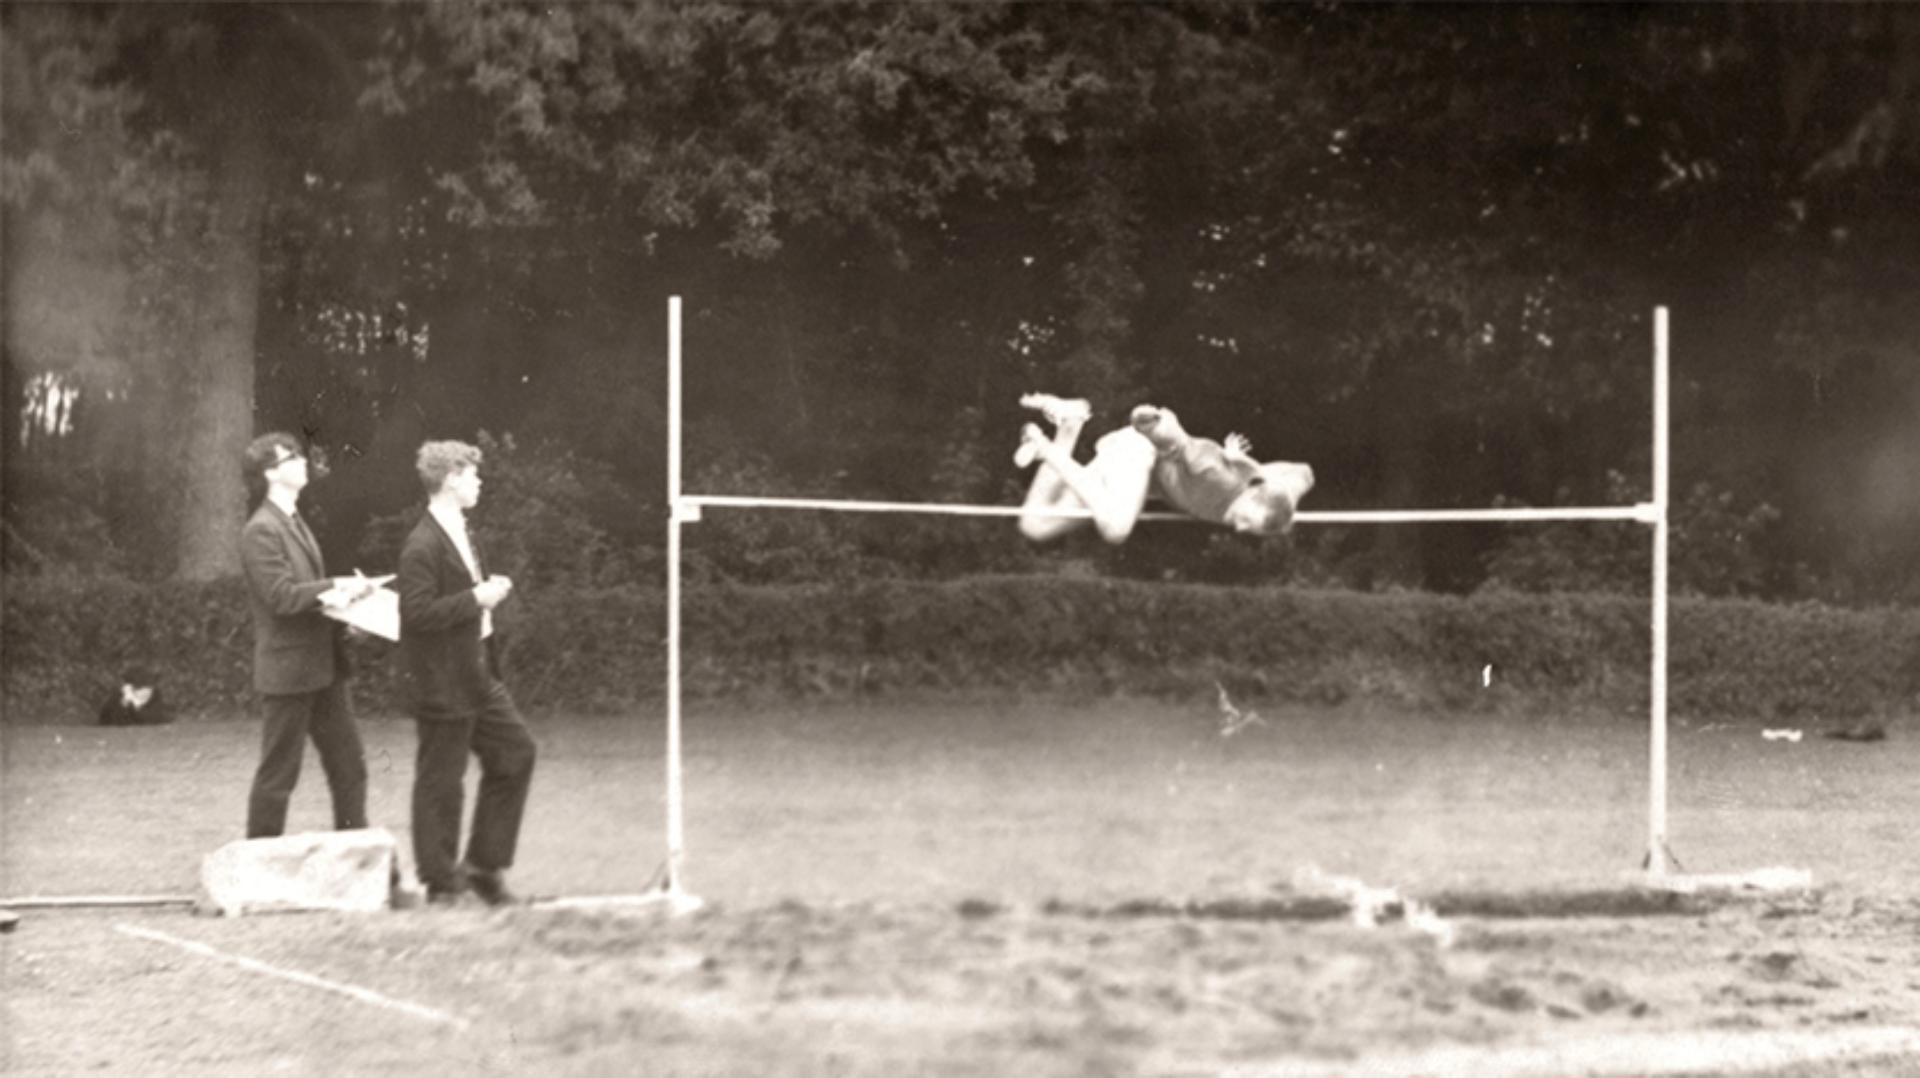 James Dyson captured mid-air above the high jump